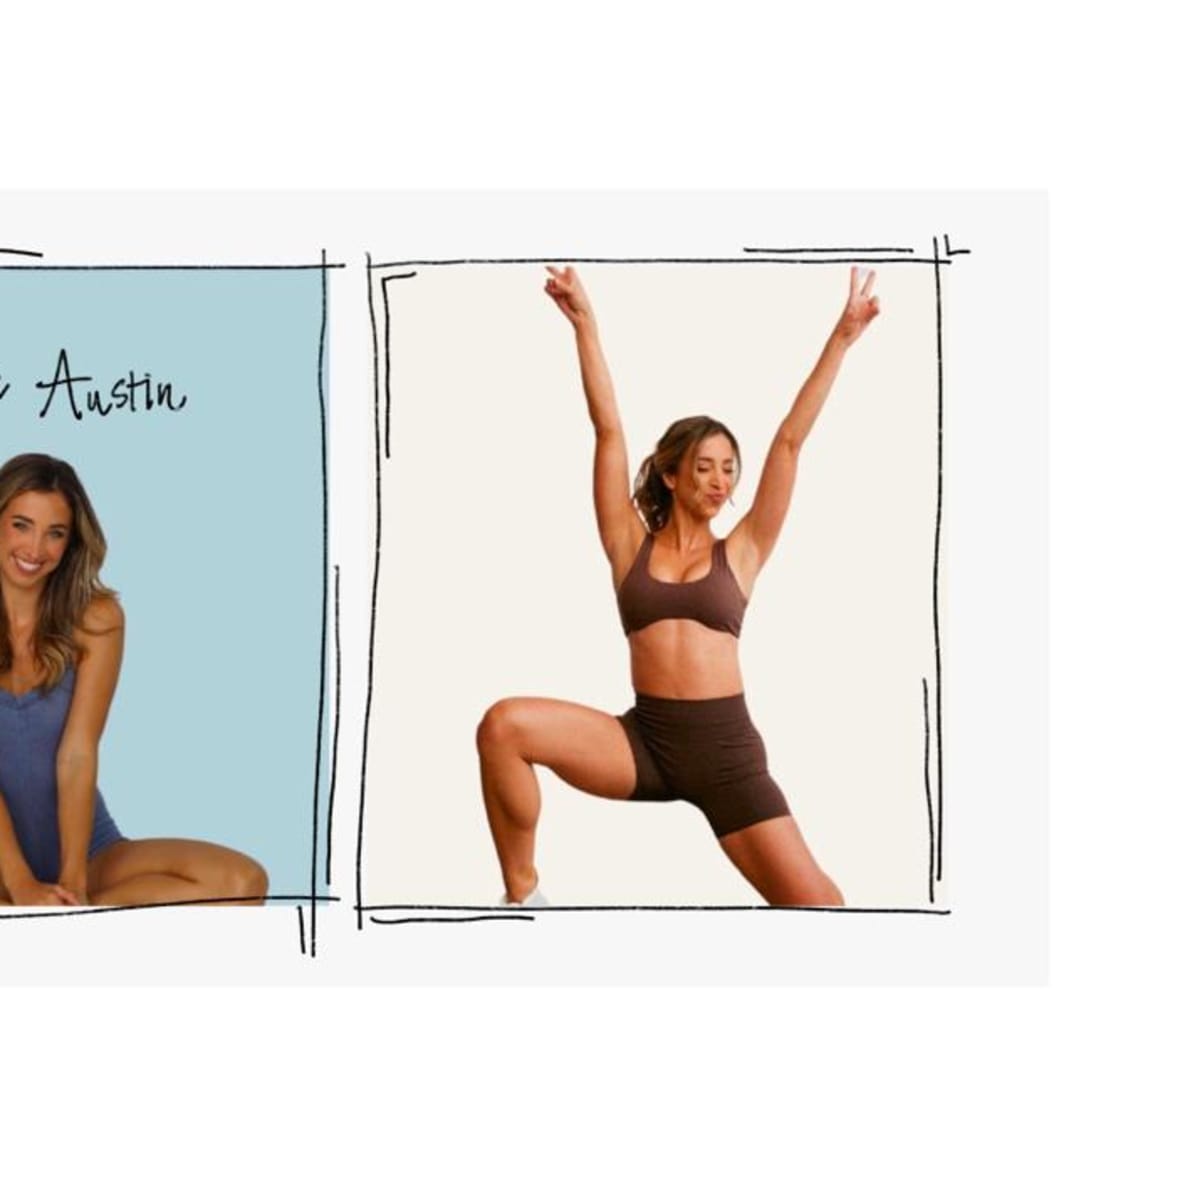 Curvy Yoga  Austin Fit Magazine – Inspiring Austin Residents to